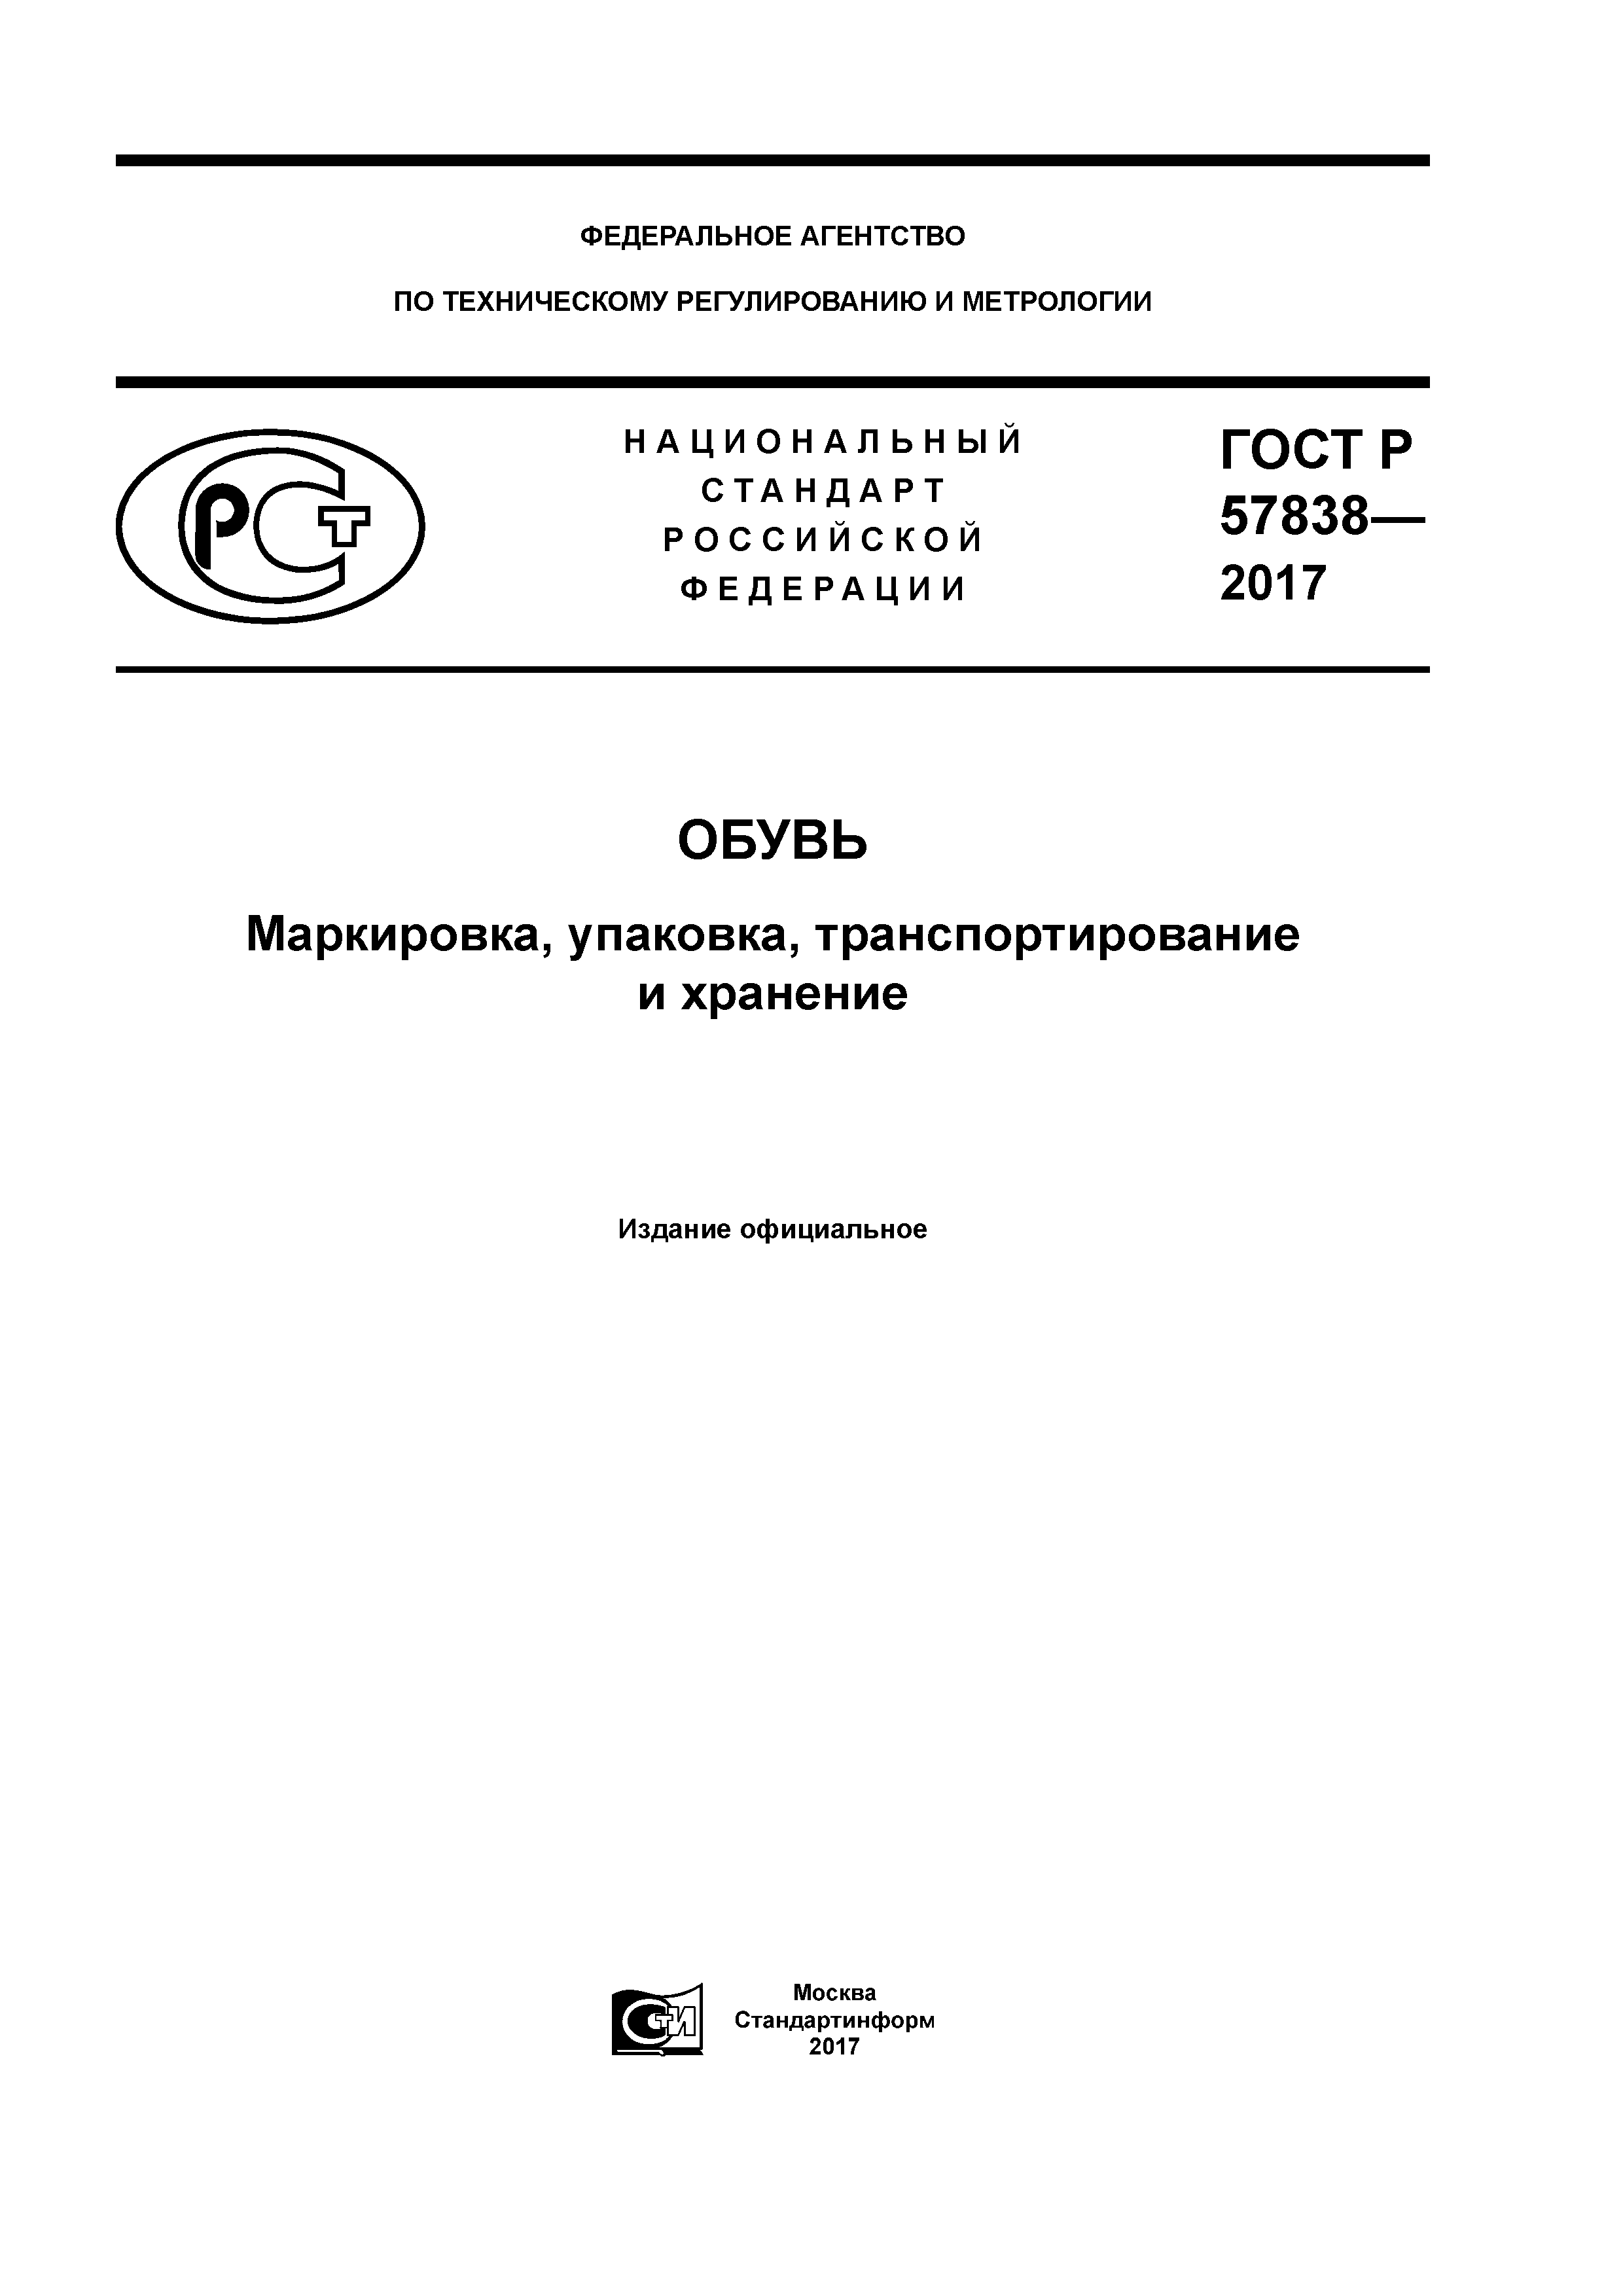 ГОСТ Р 57838-2017